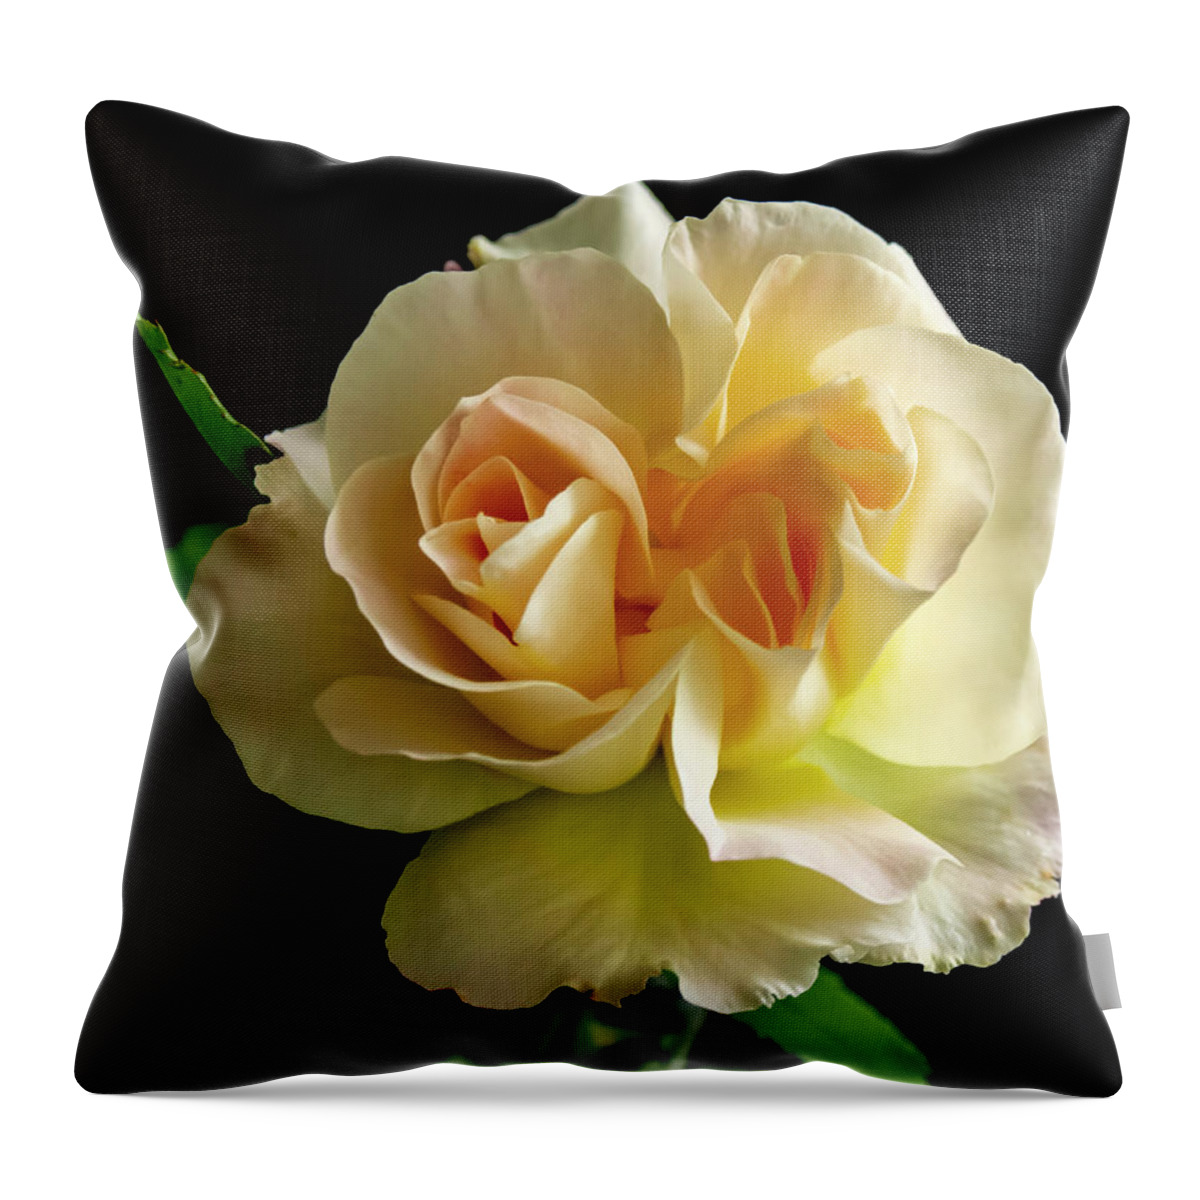 Flower Throw Pillow featuring the photograph Golden Rose by Cathy Kovarik